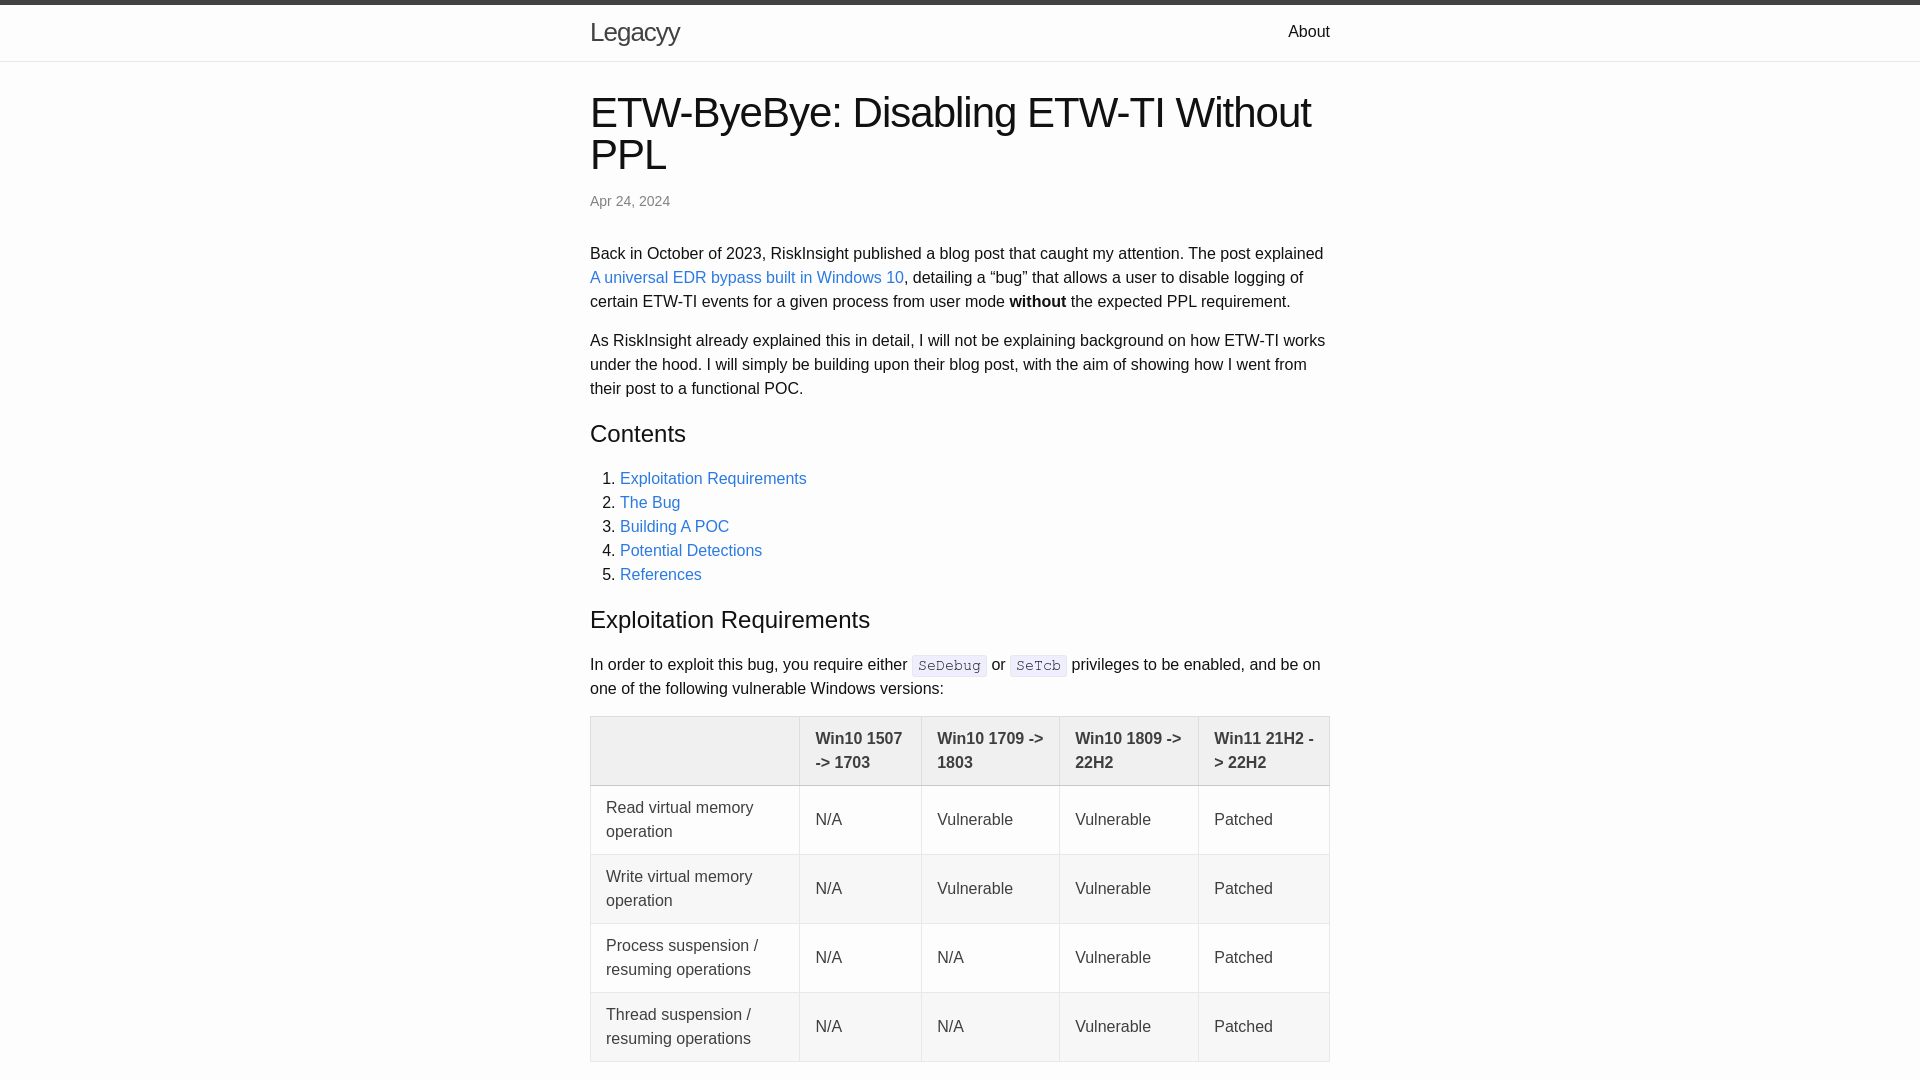 ETW-ByeBye: Disabling ETW-TI Without PPL | Legacyy